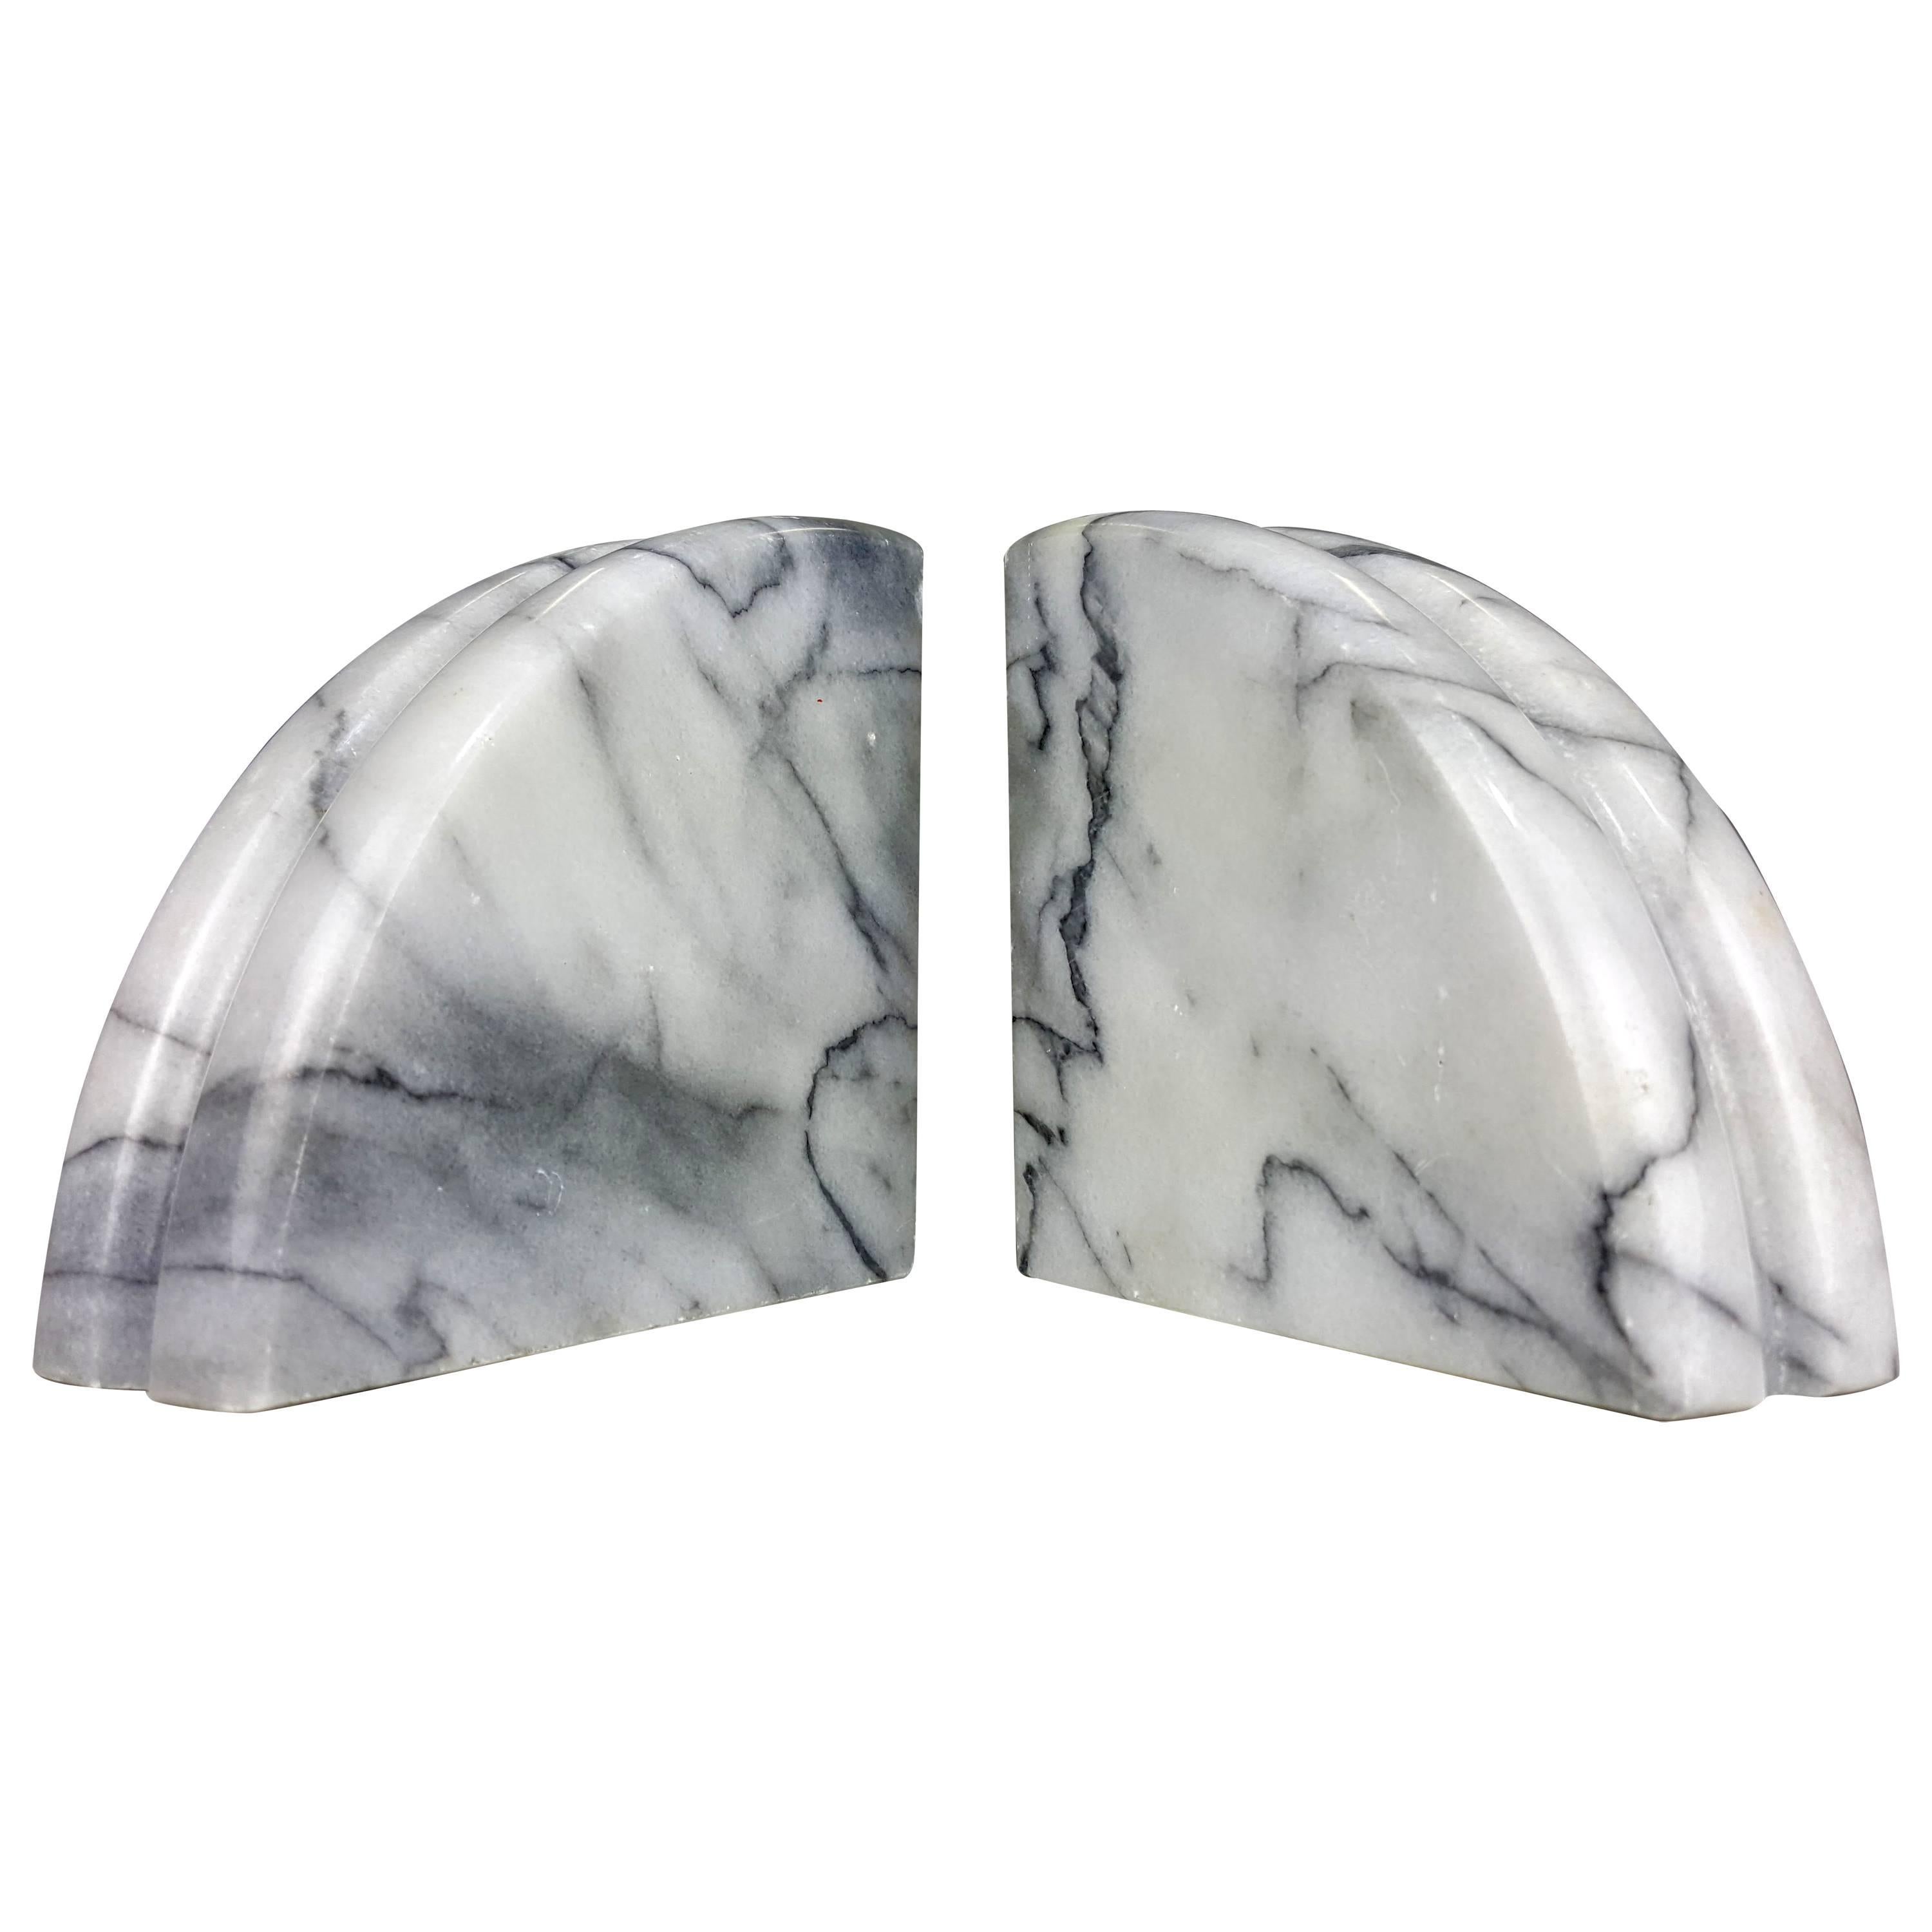 Heavy Demilune Carrara Marble Bookends, Italy